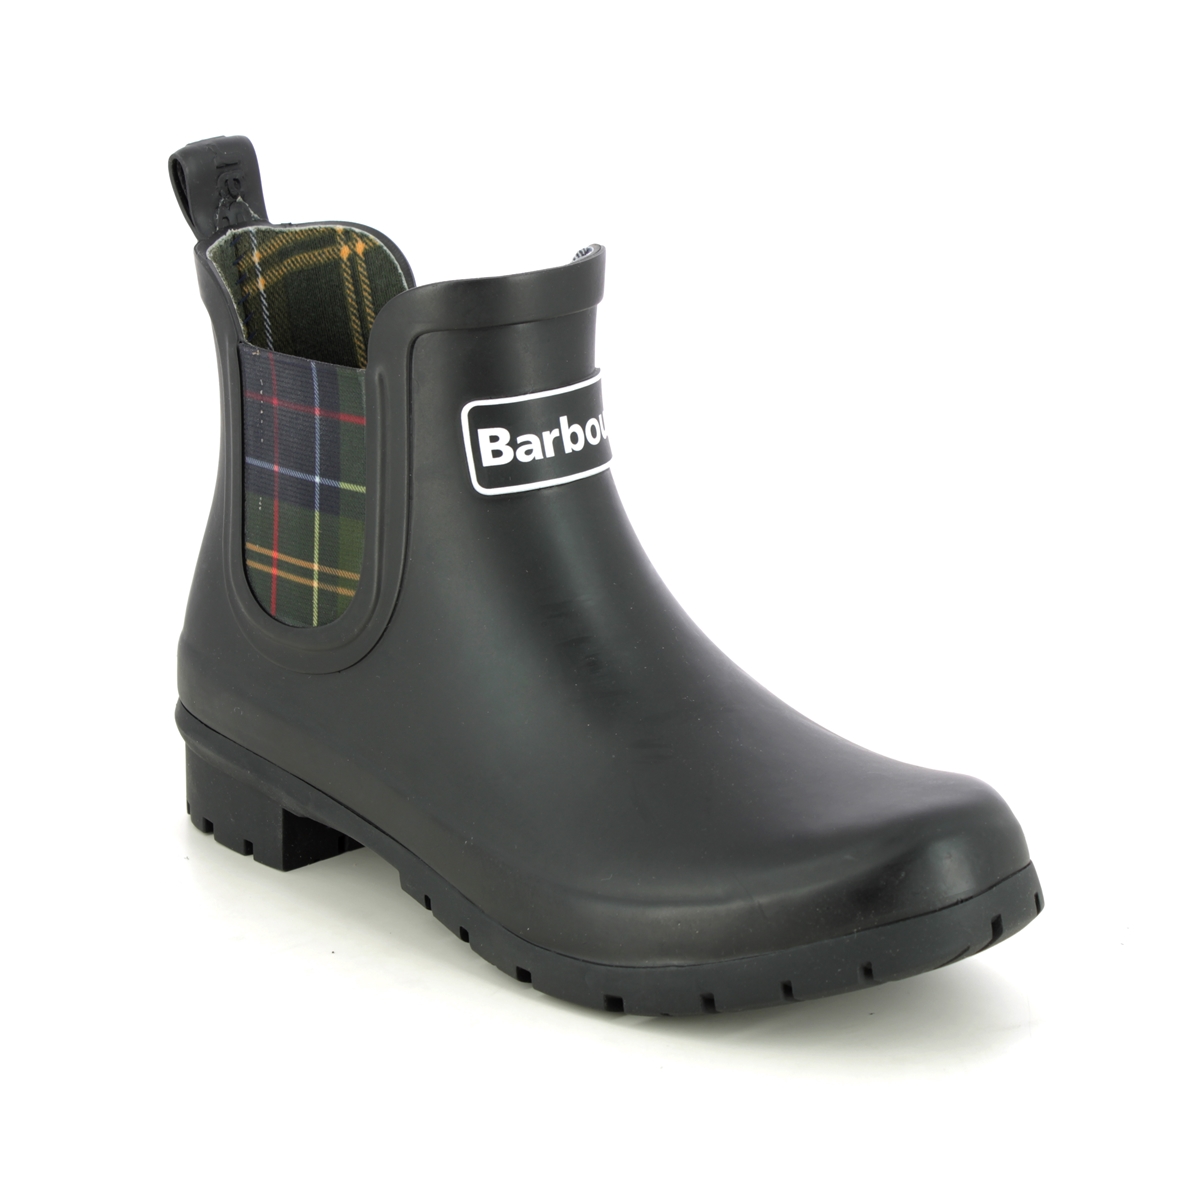 Barbour Kingham Wellie Black Boots Lrf0088-Bk11 In Size 5 In Plain Black